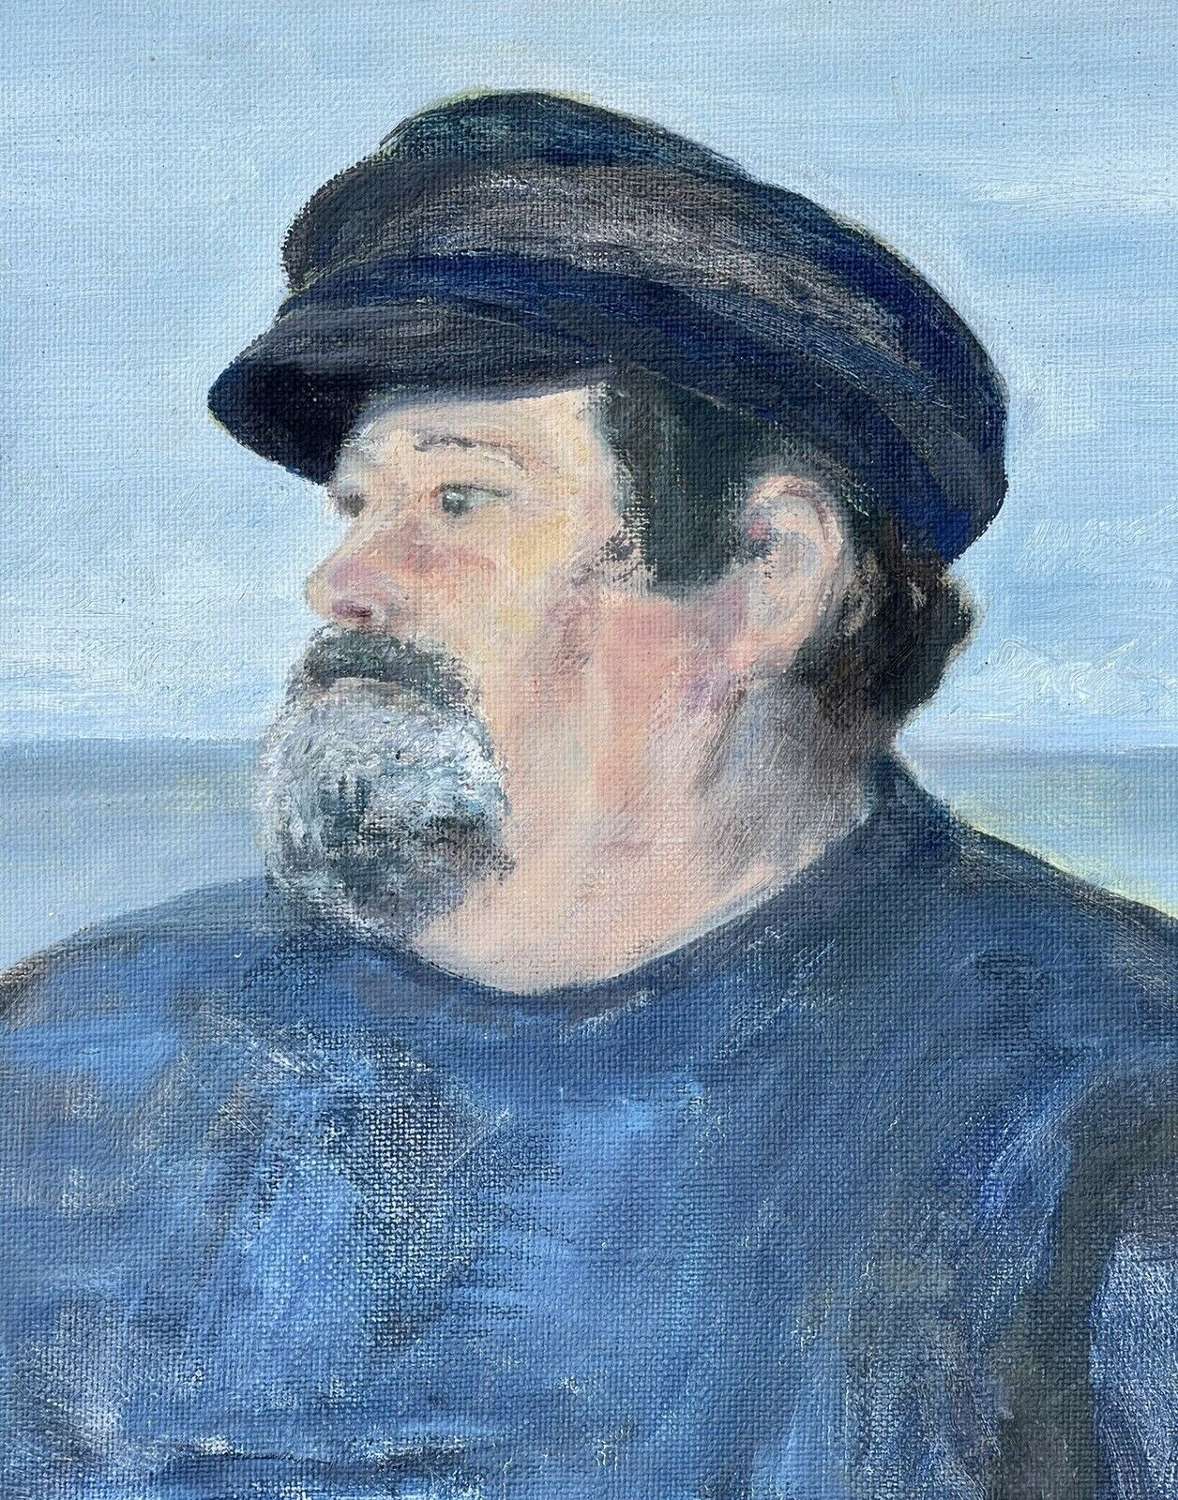 Cornish fisherman portrait